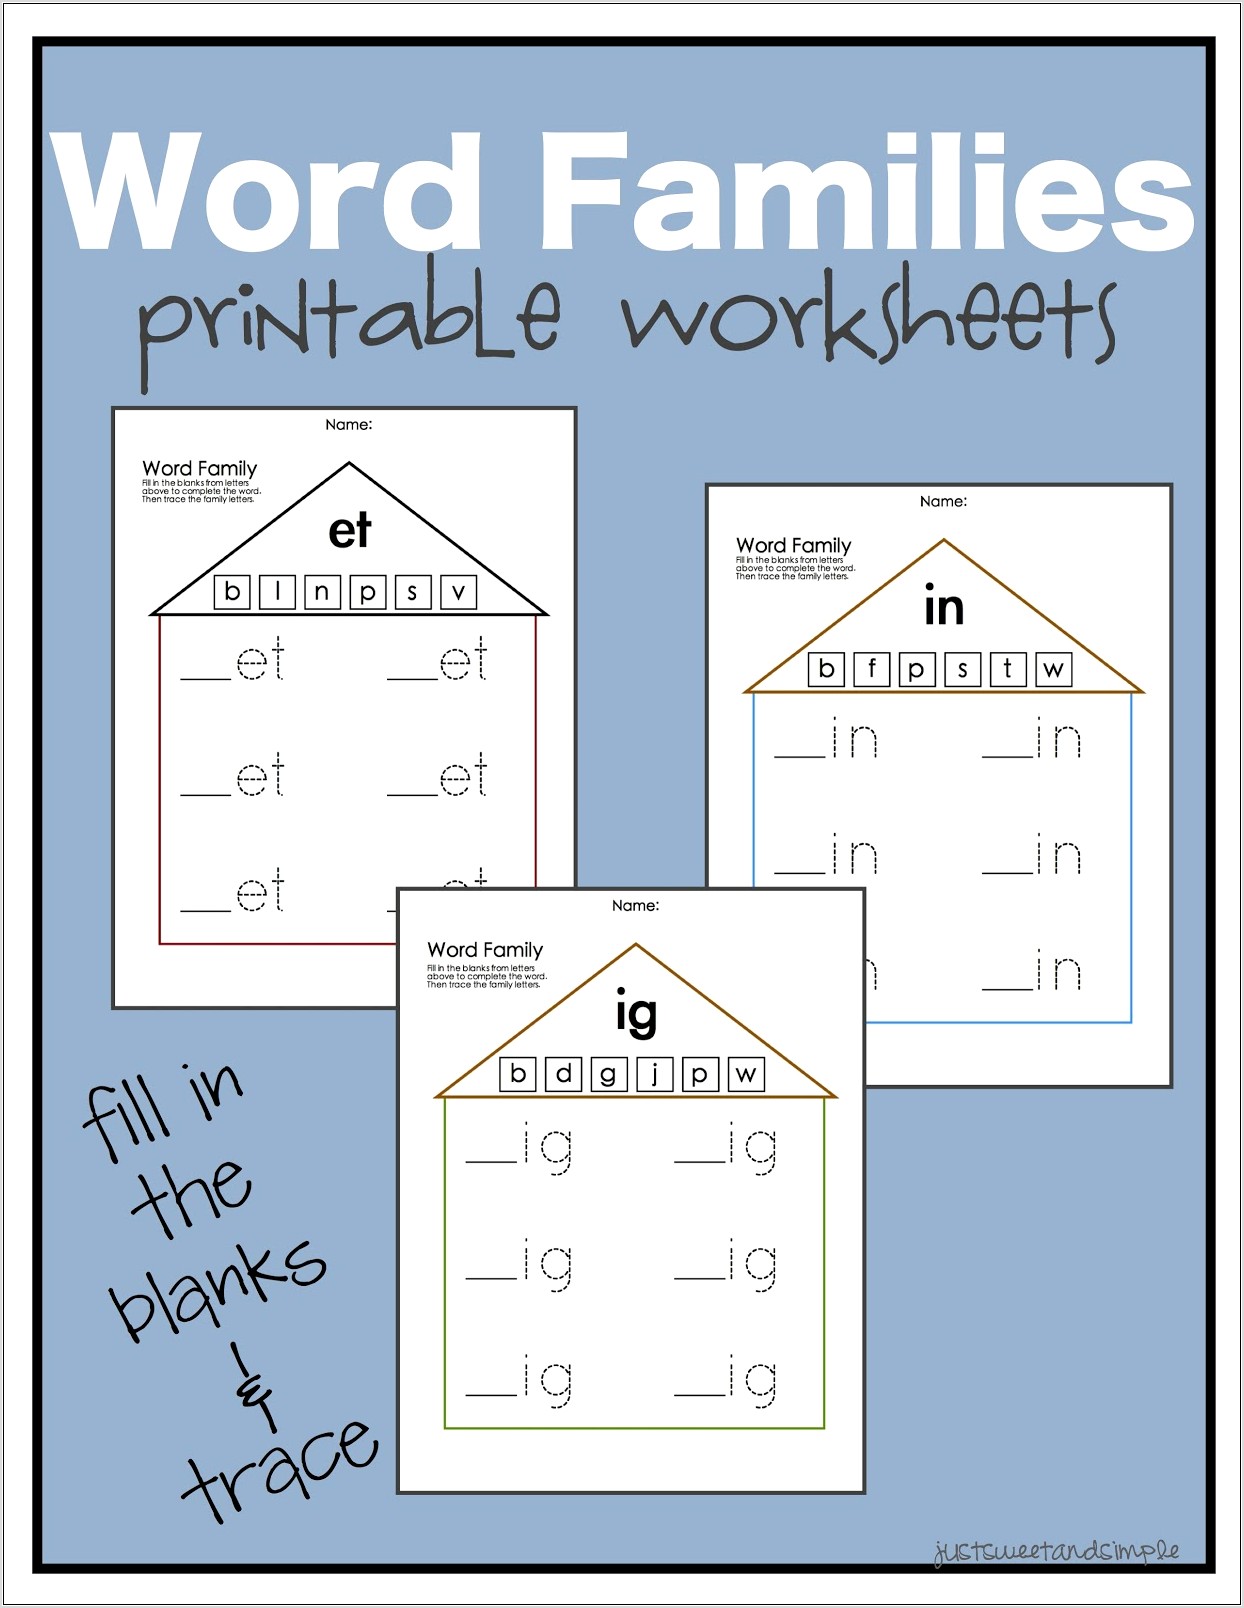 Word Families Worksheets For Preschoolers